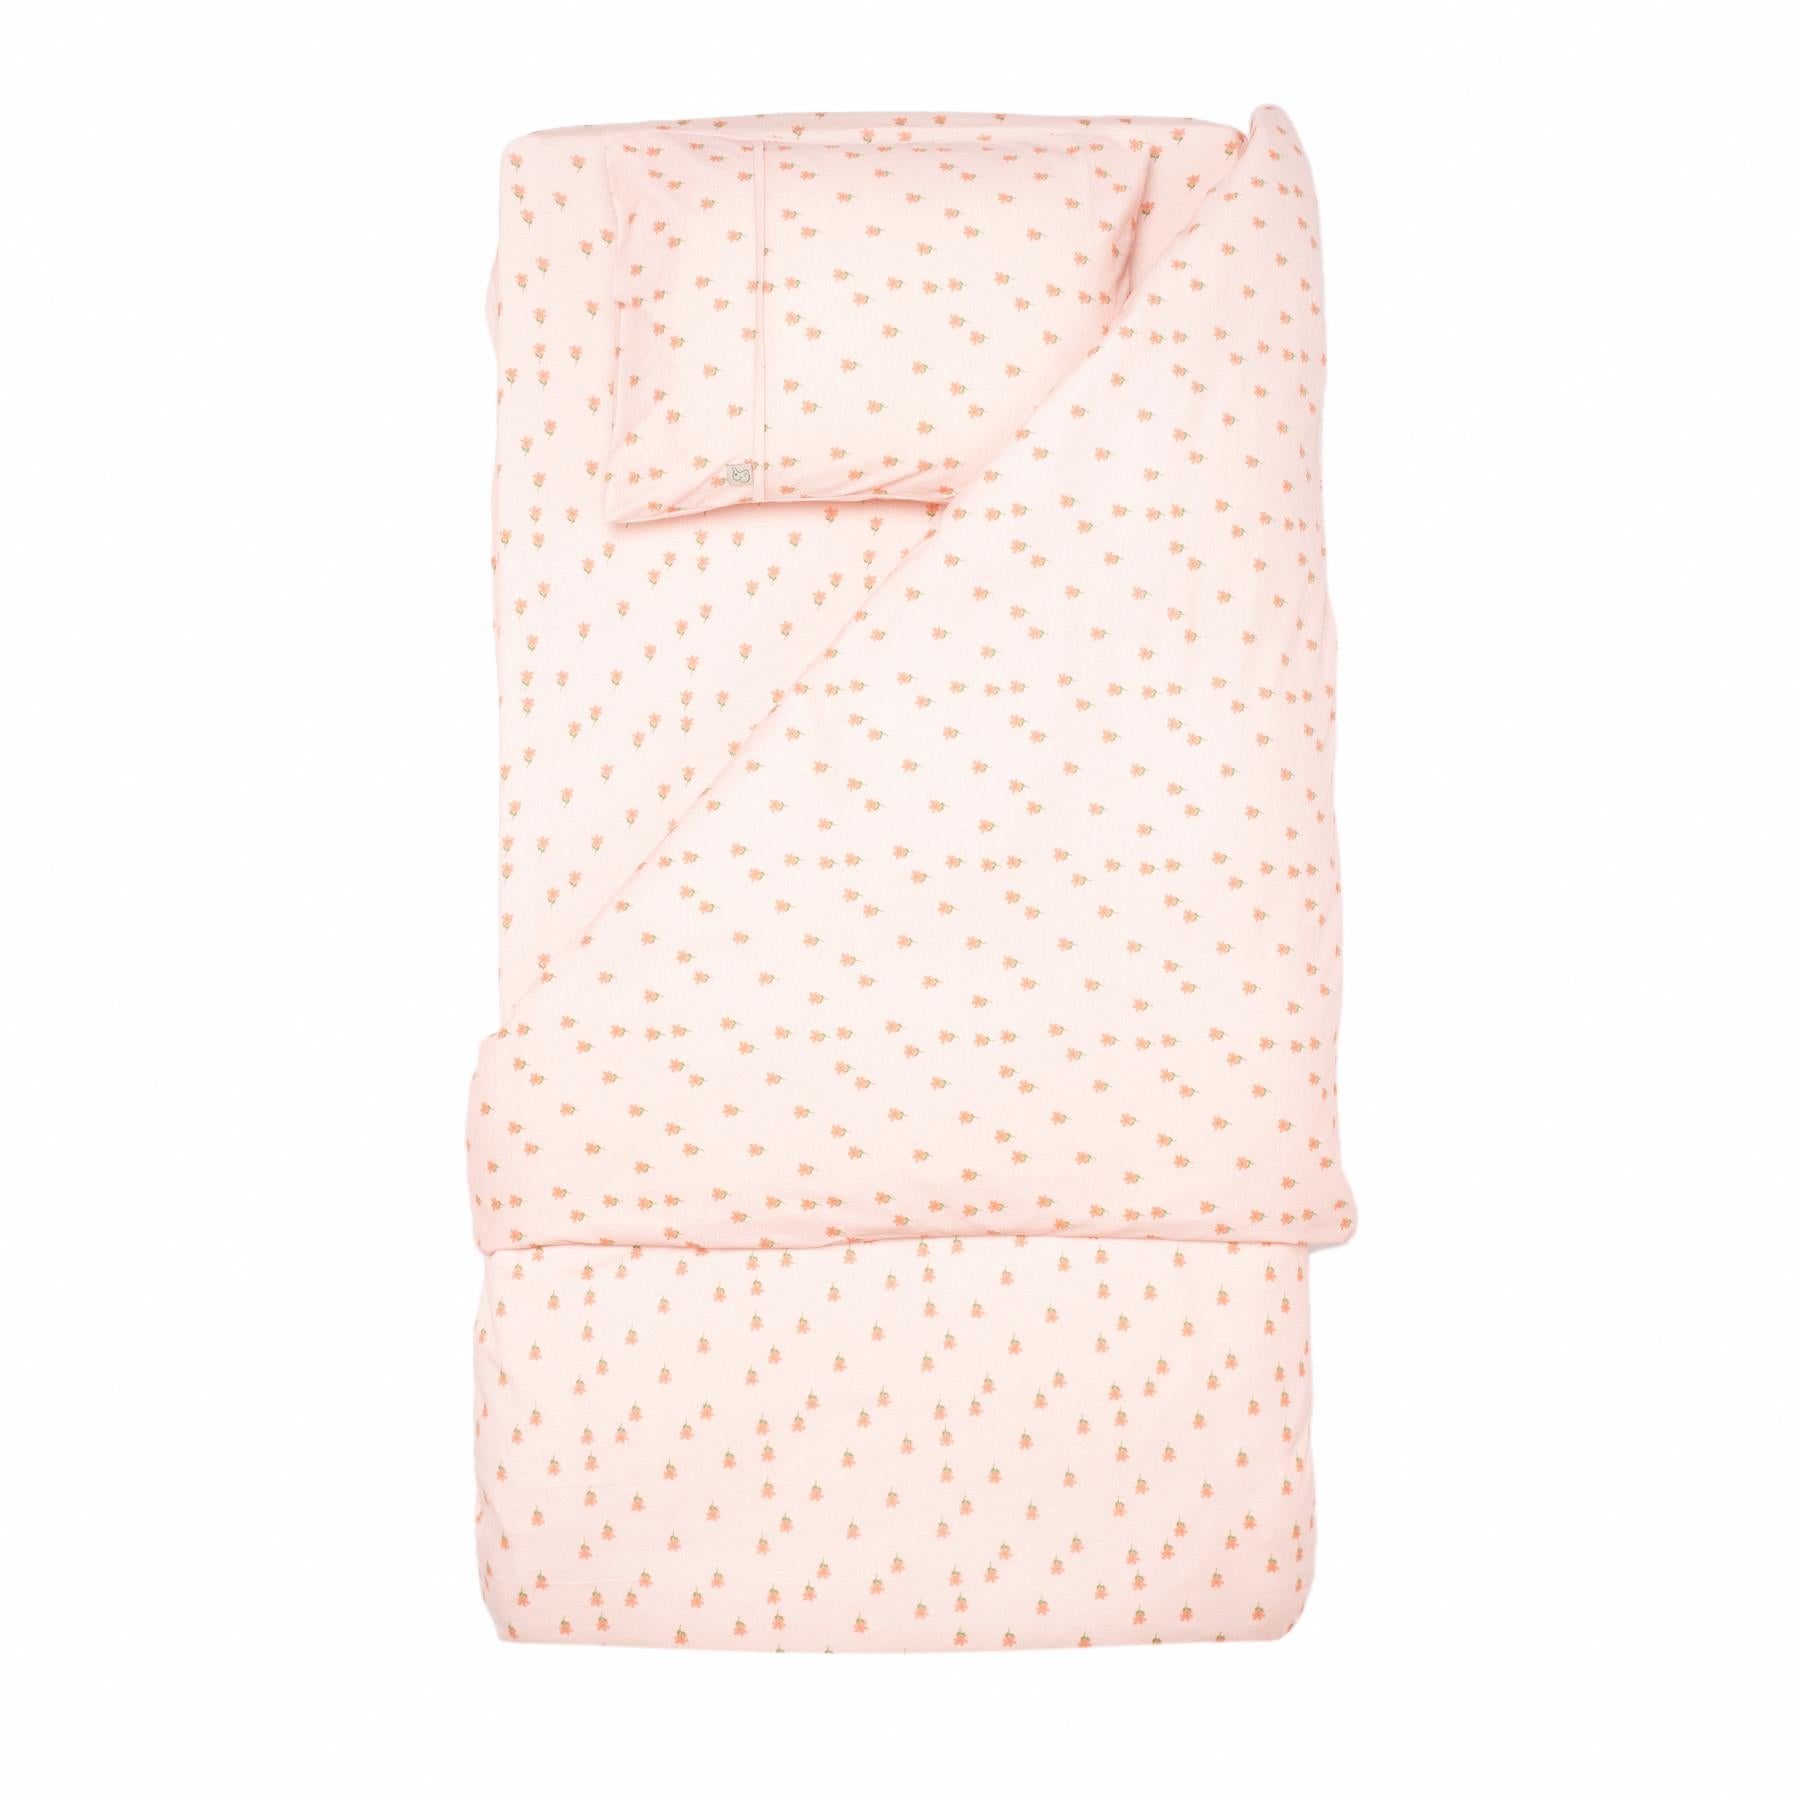 Patterned Cotton Baby Duvet Cover Set Pink